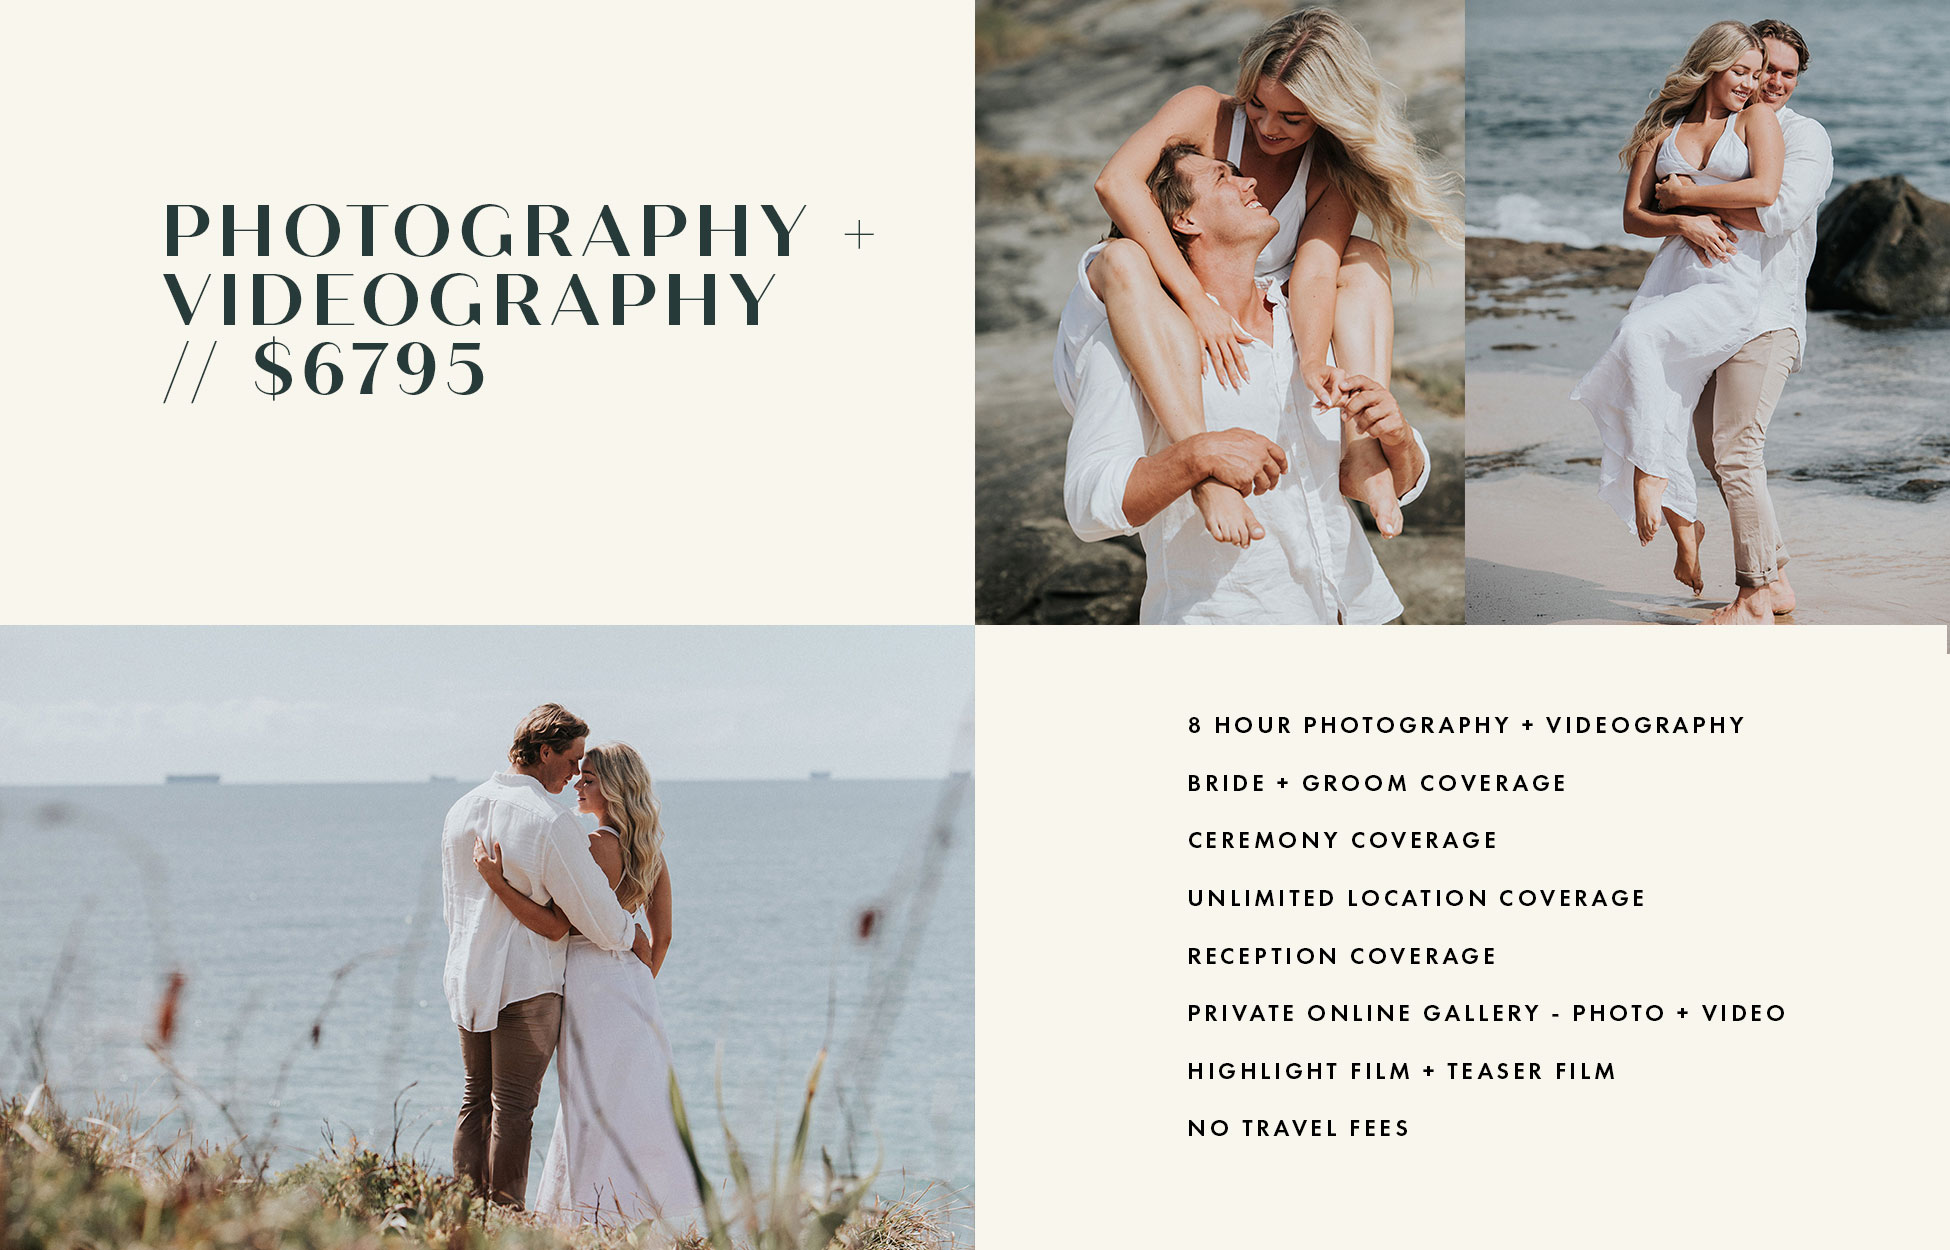 Neil-Hole-Photography-Wedding-Photography-Sunshine-Coast-photo-videography-Package